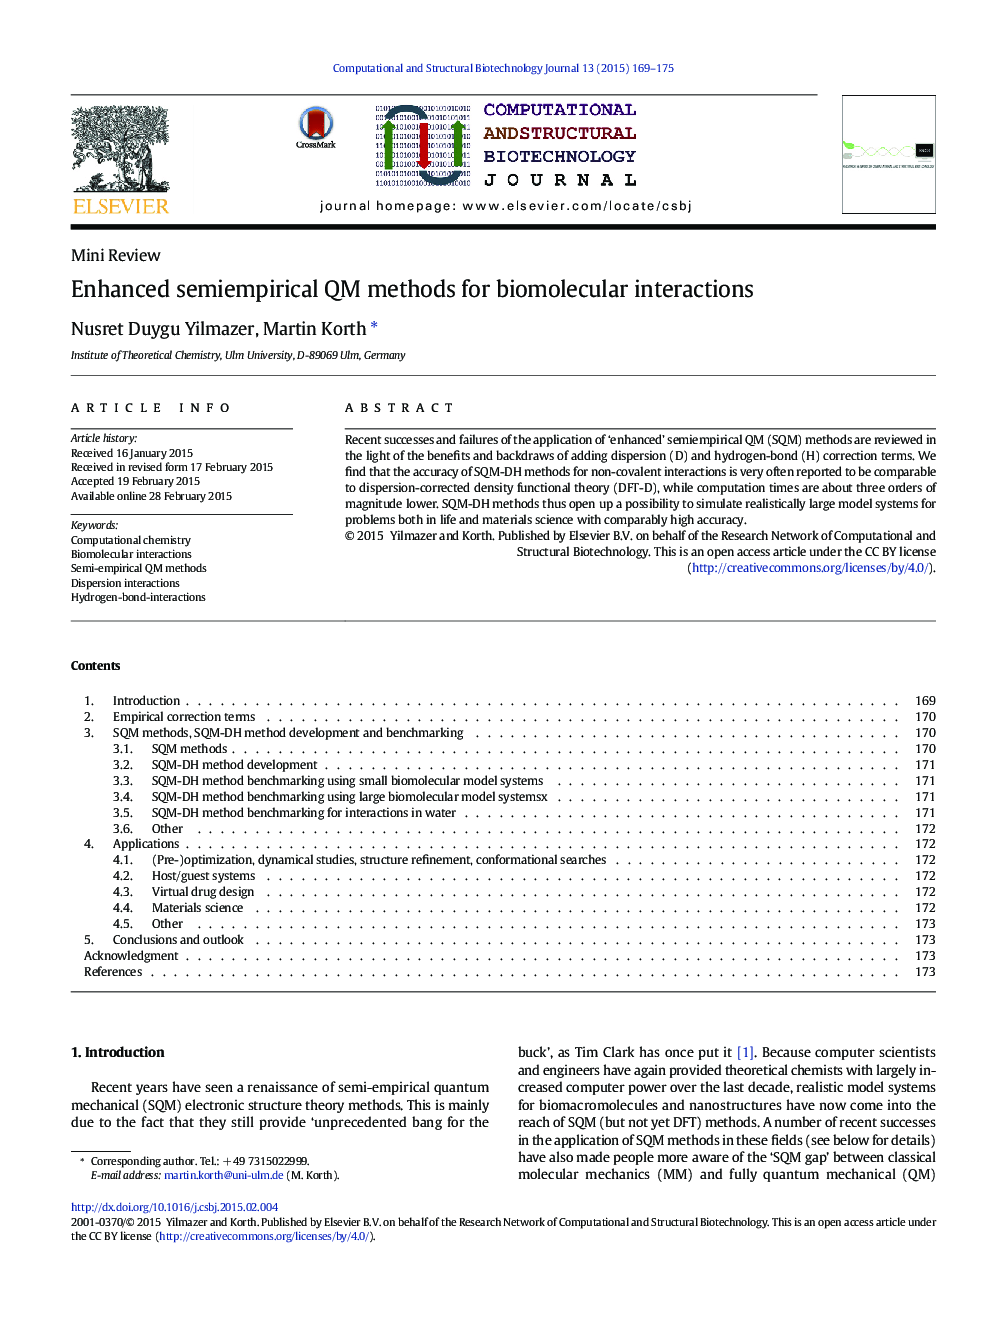 Enhanced semiempirical QM methods for biomolecular interactions